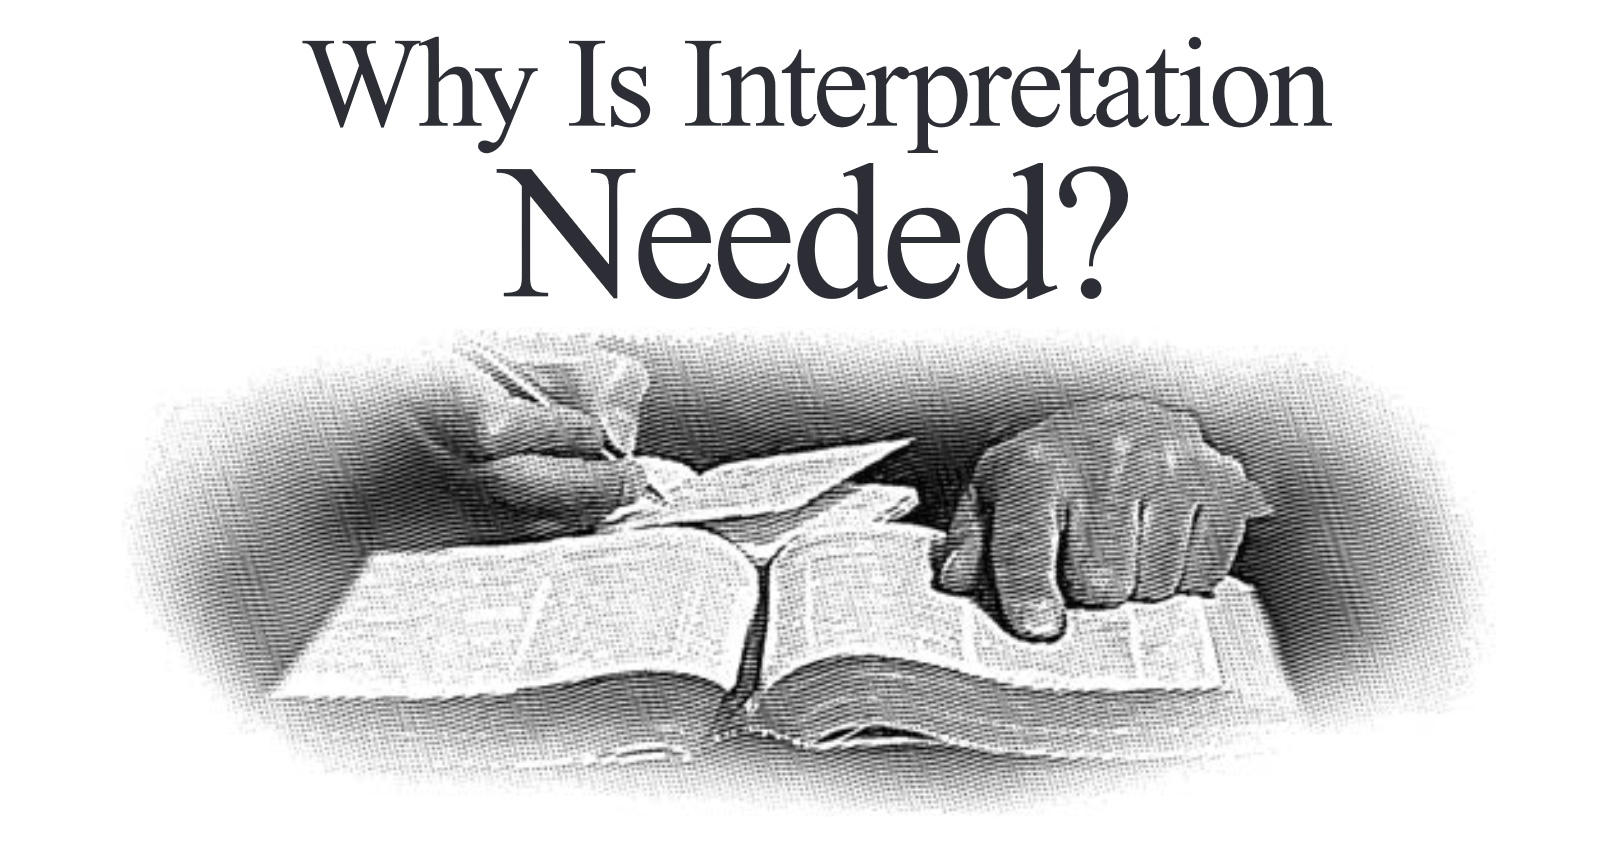 Why Is Interpretation Needed?